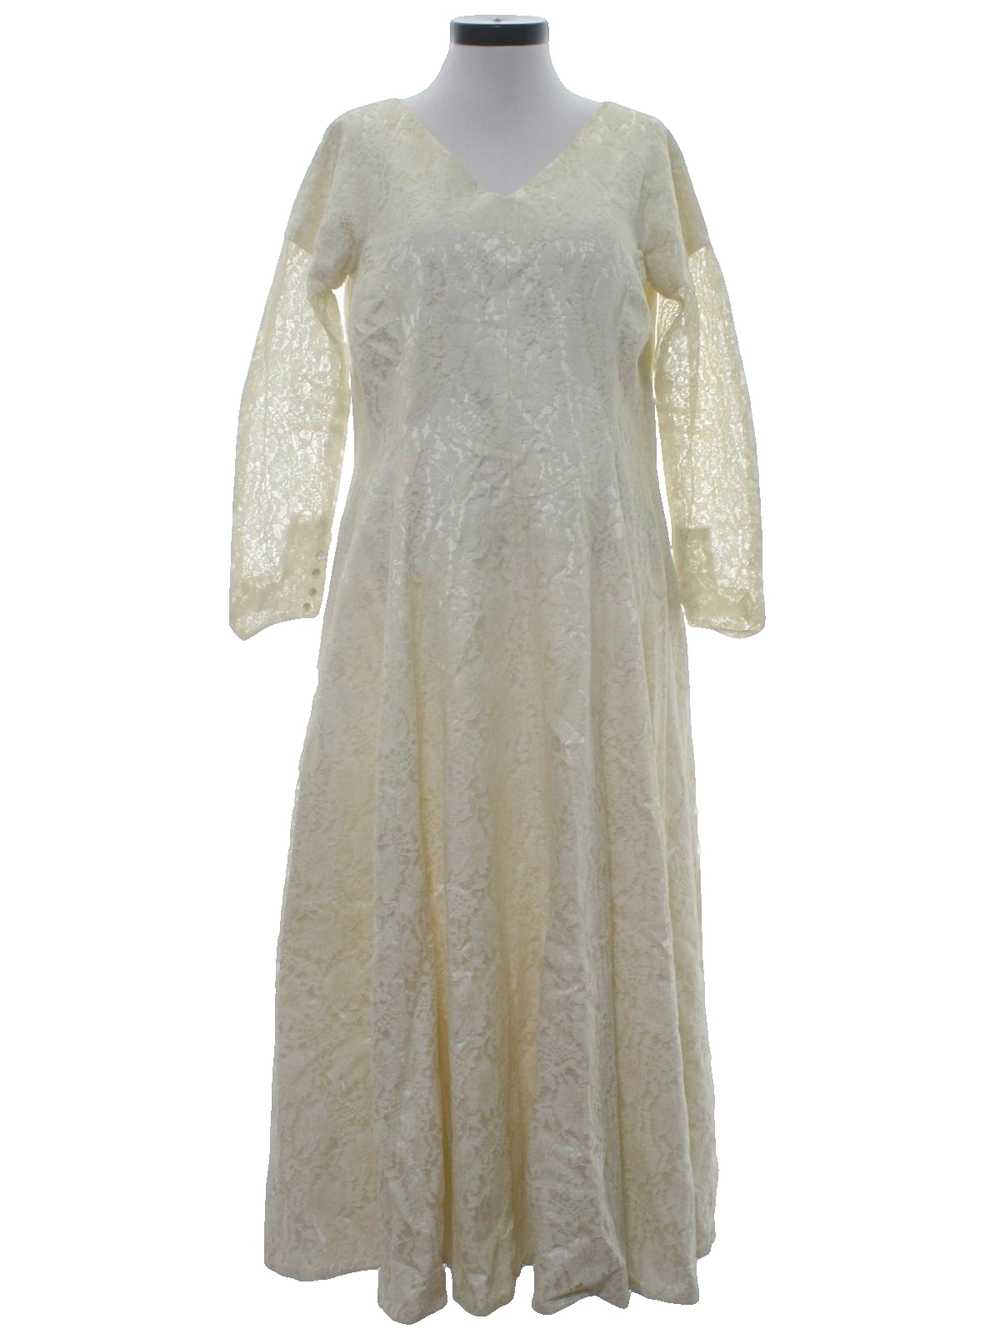 1950's Wedding Maxi Dress - image 1